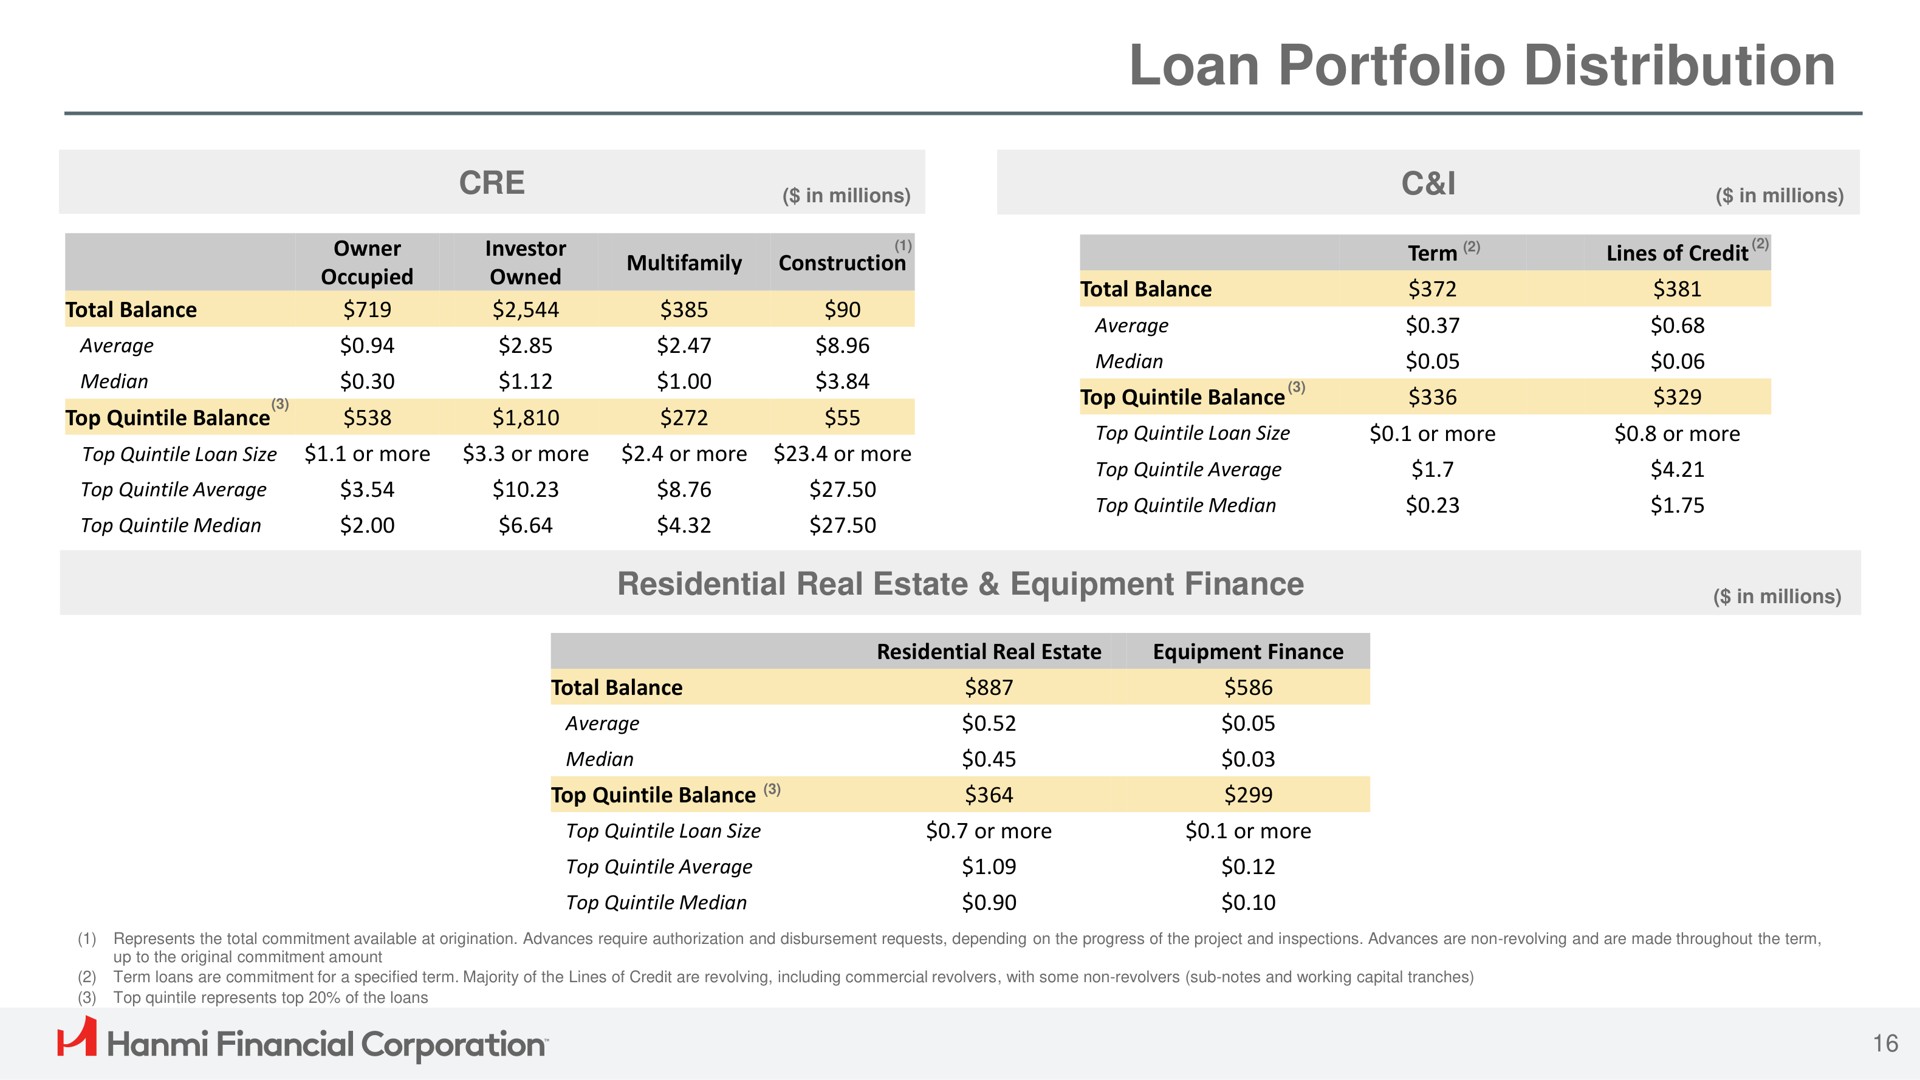 loan portfolio distribution a financial corporation | Hanmi Financial